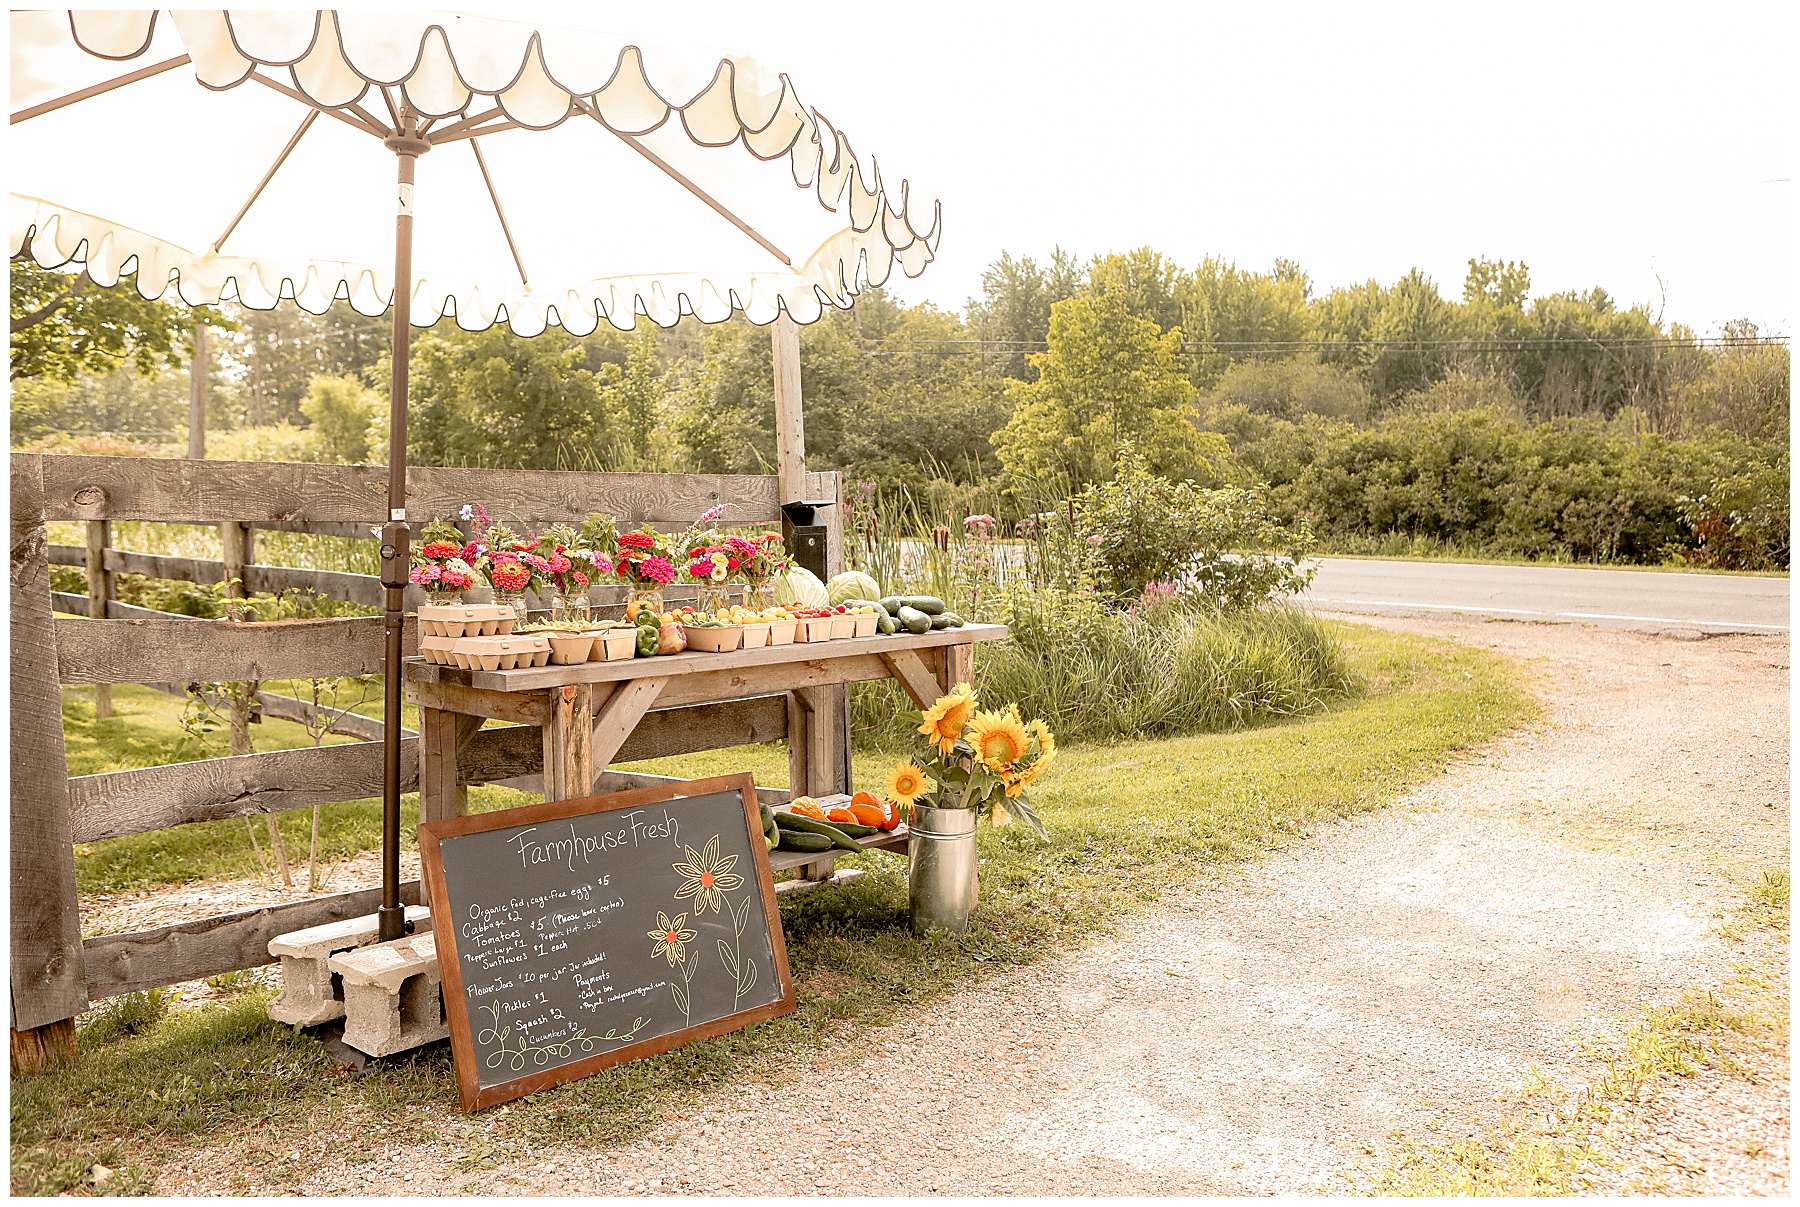 Roadside Farm stand